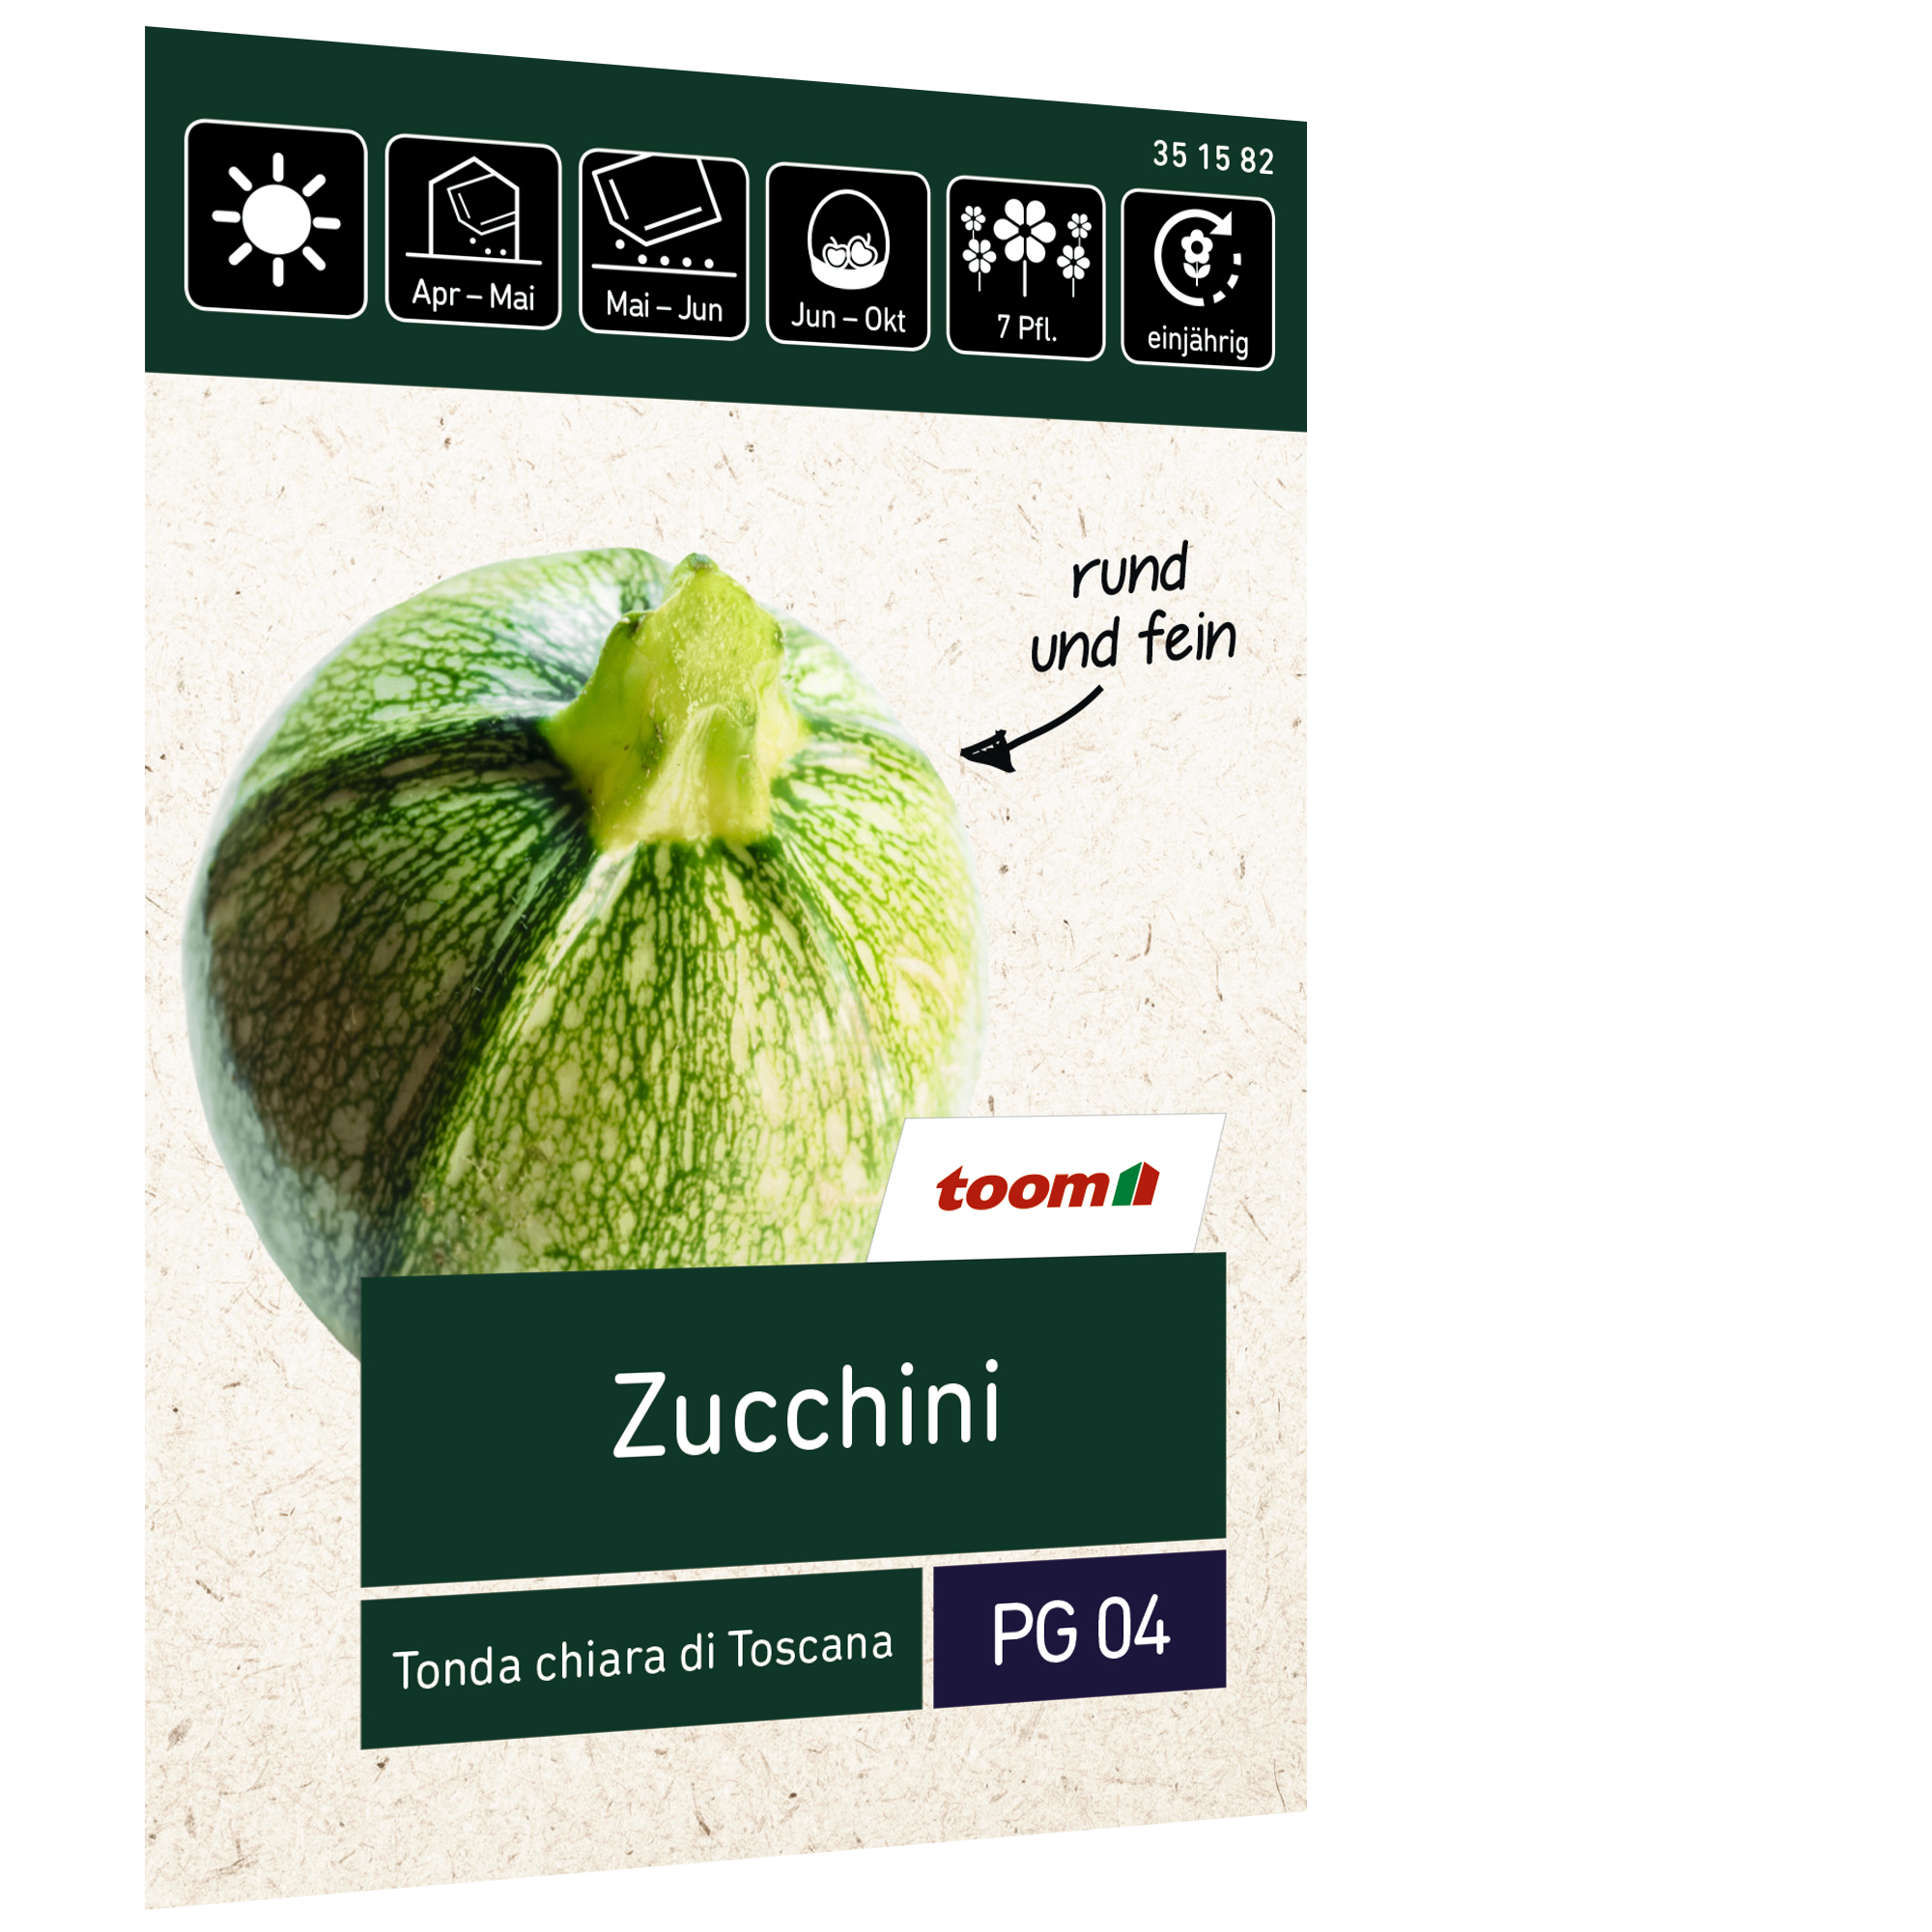 Zucchini 'Tonda chiara di Toscana' + product picture